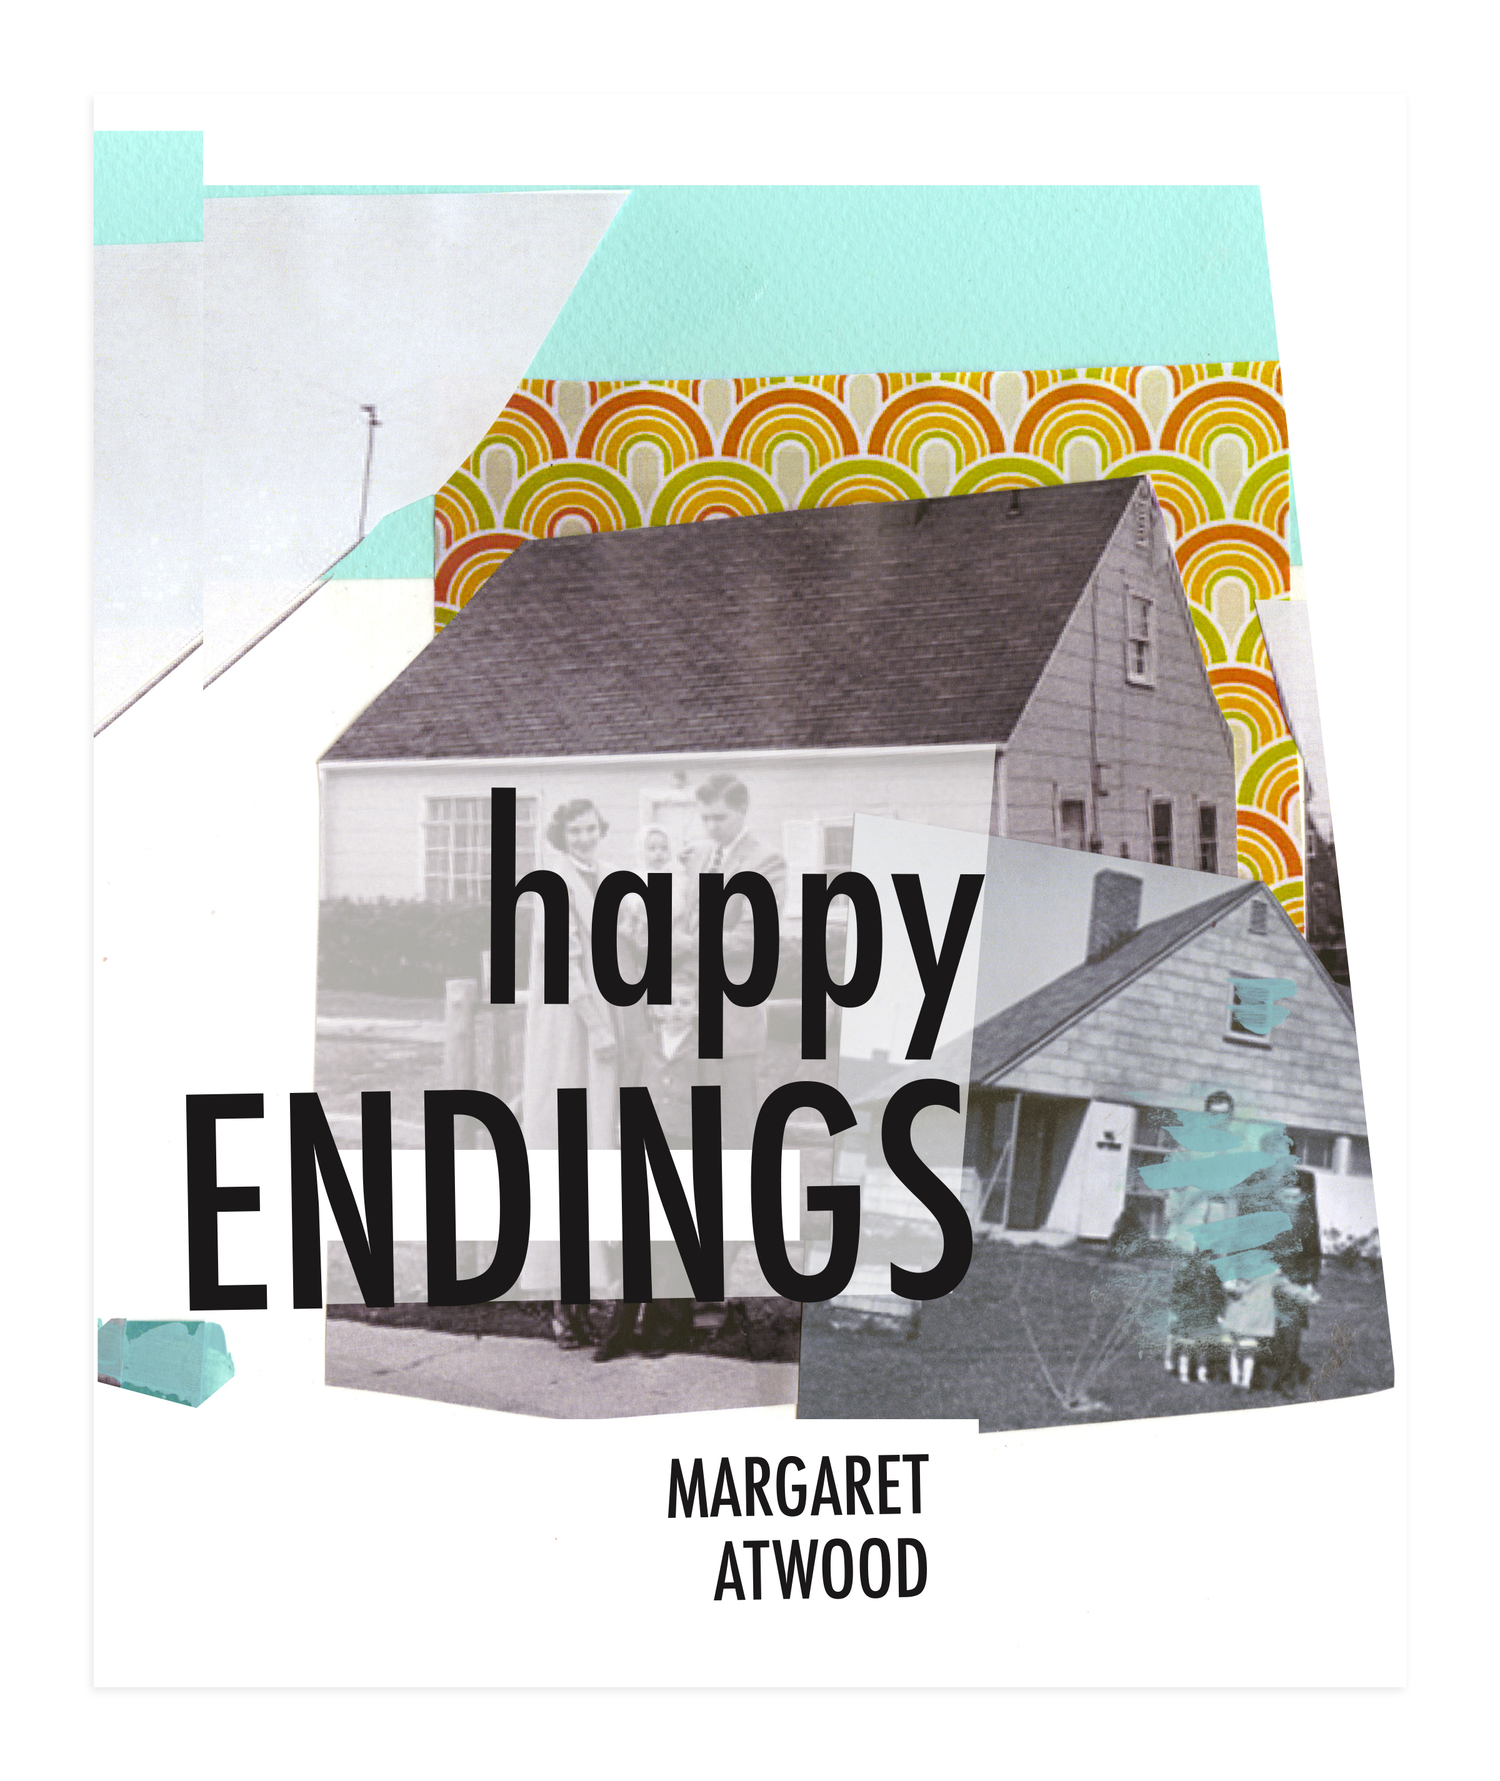 happy endings margaret atwood summary